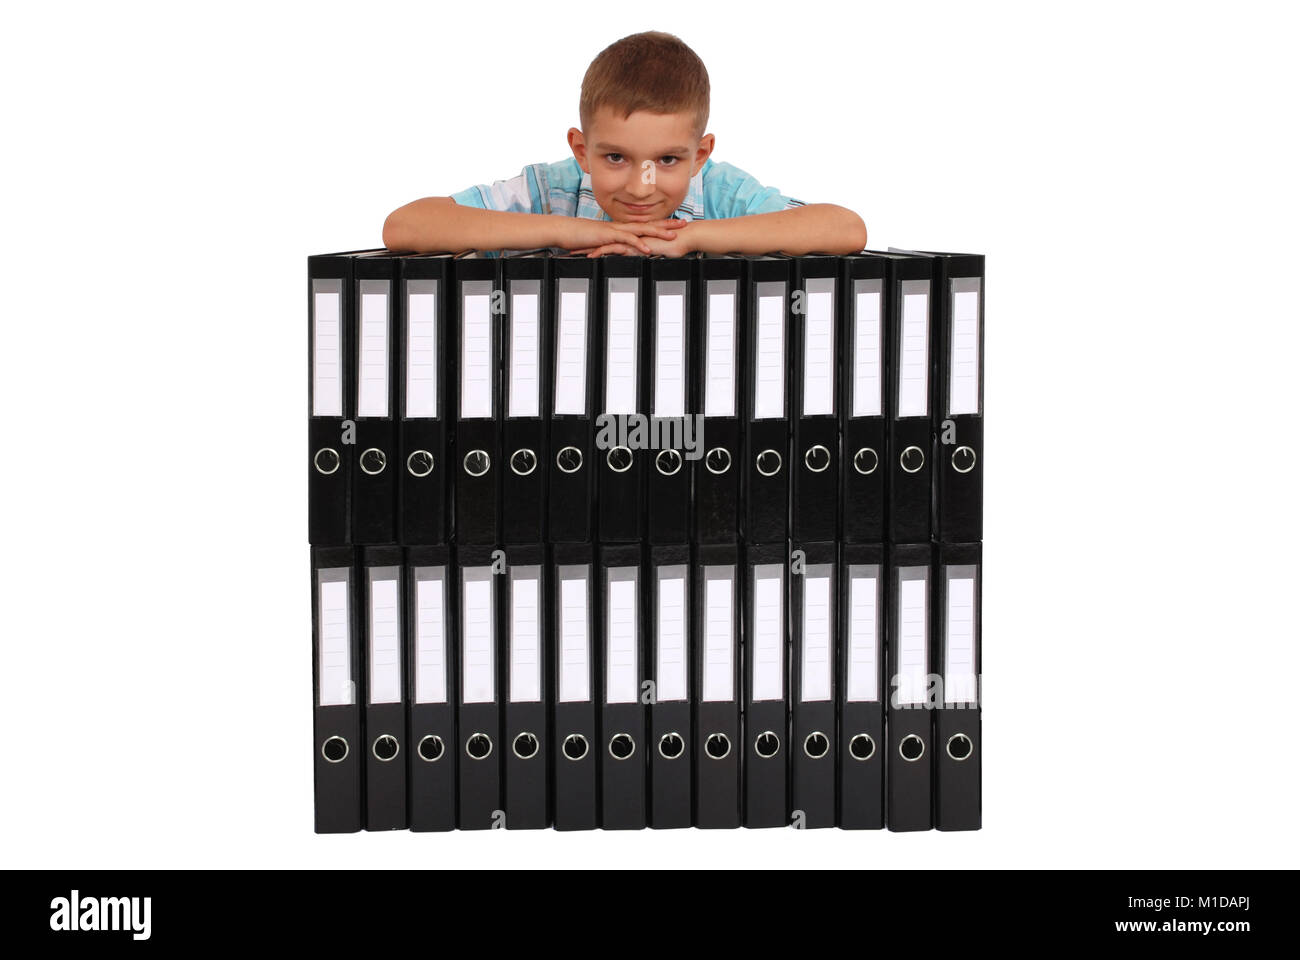 The boy bases on many big black folders on a white background Stock Photo